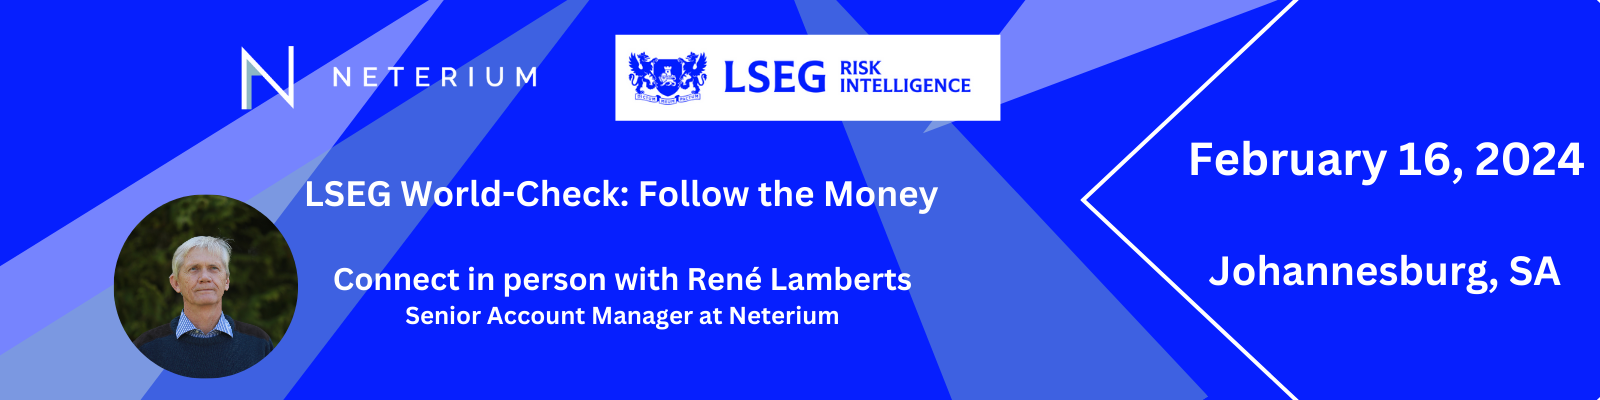 LSEG World-Check: Follow the Money - 2nd Edition